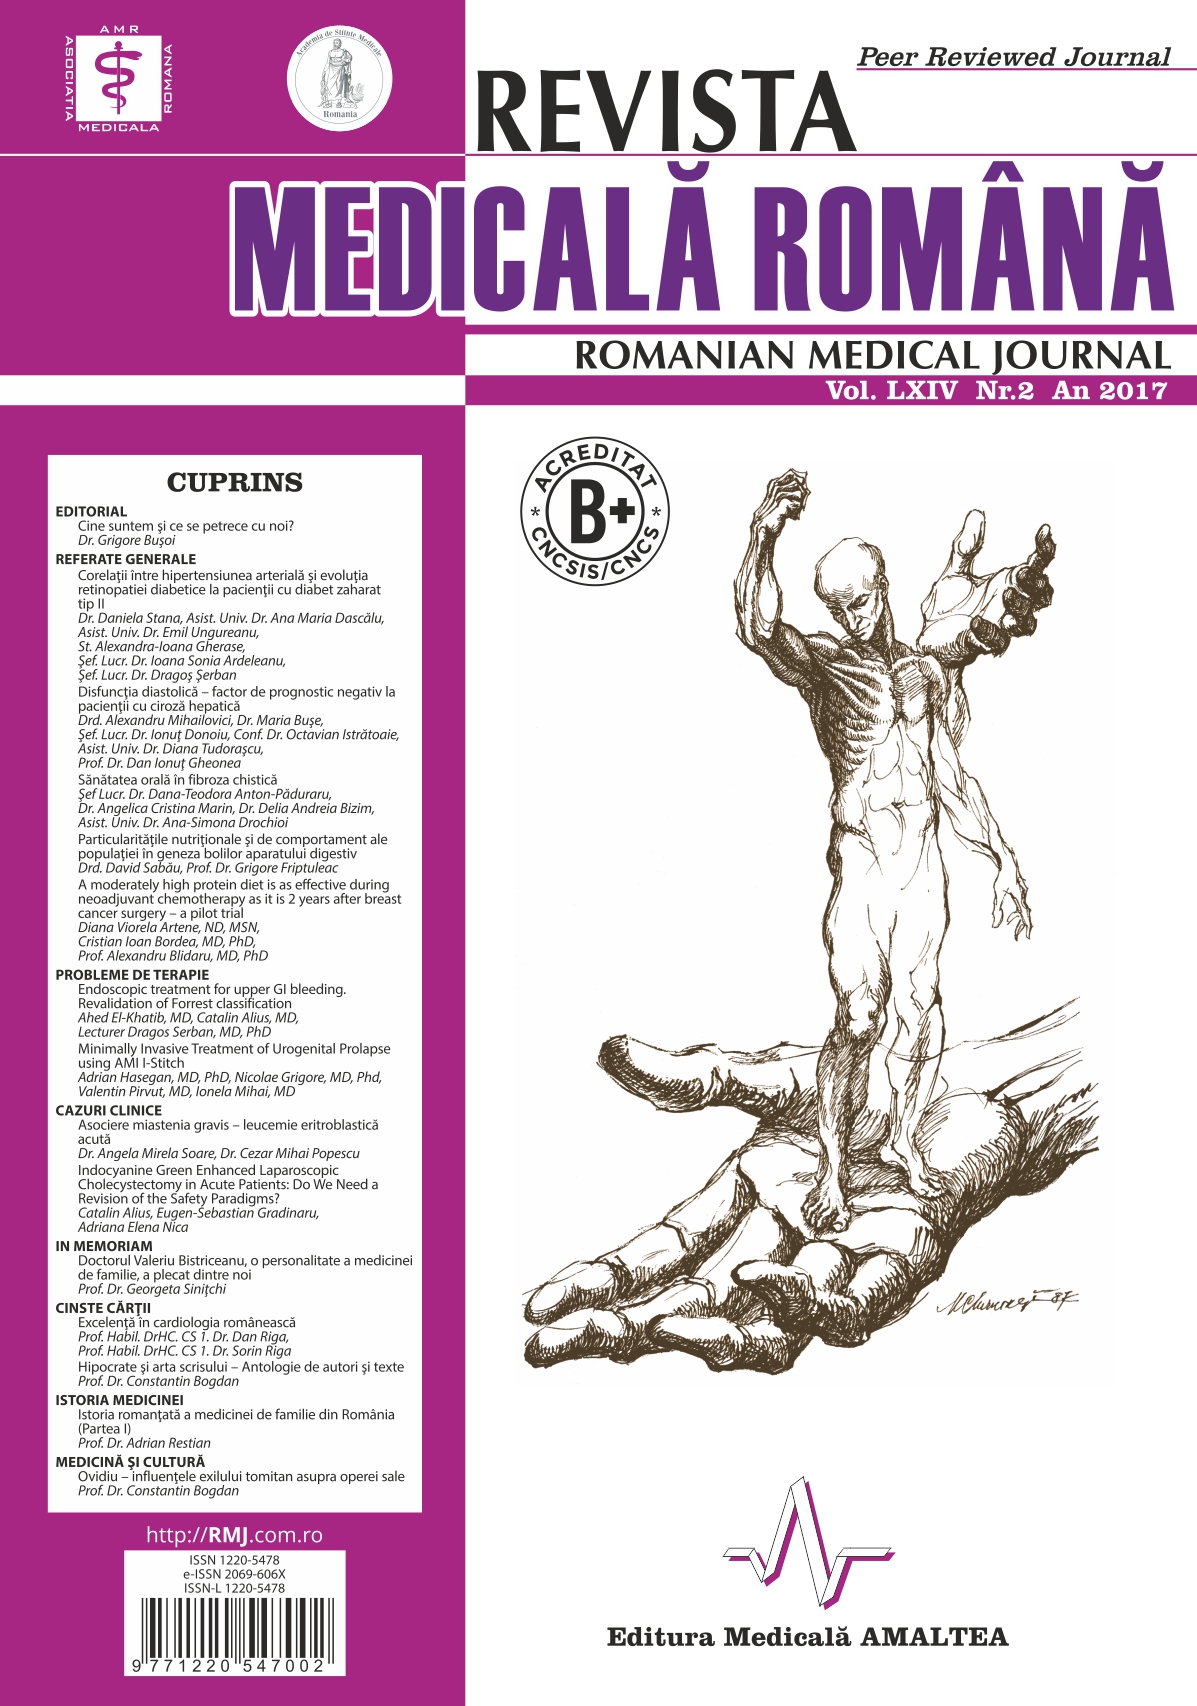 REVISTA MEDICALA ROMANA - Romanian Medical Journal, Vol. LXIV, No. 2, Year 2017